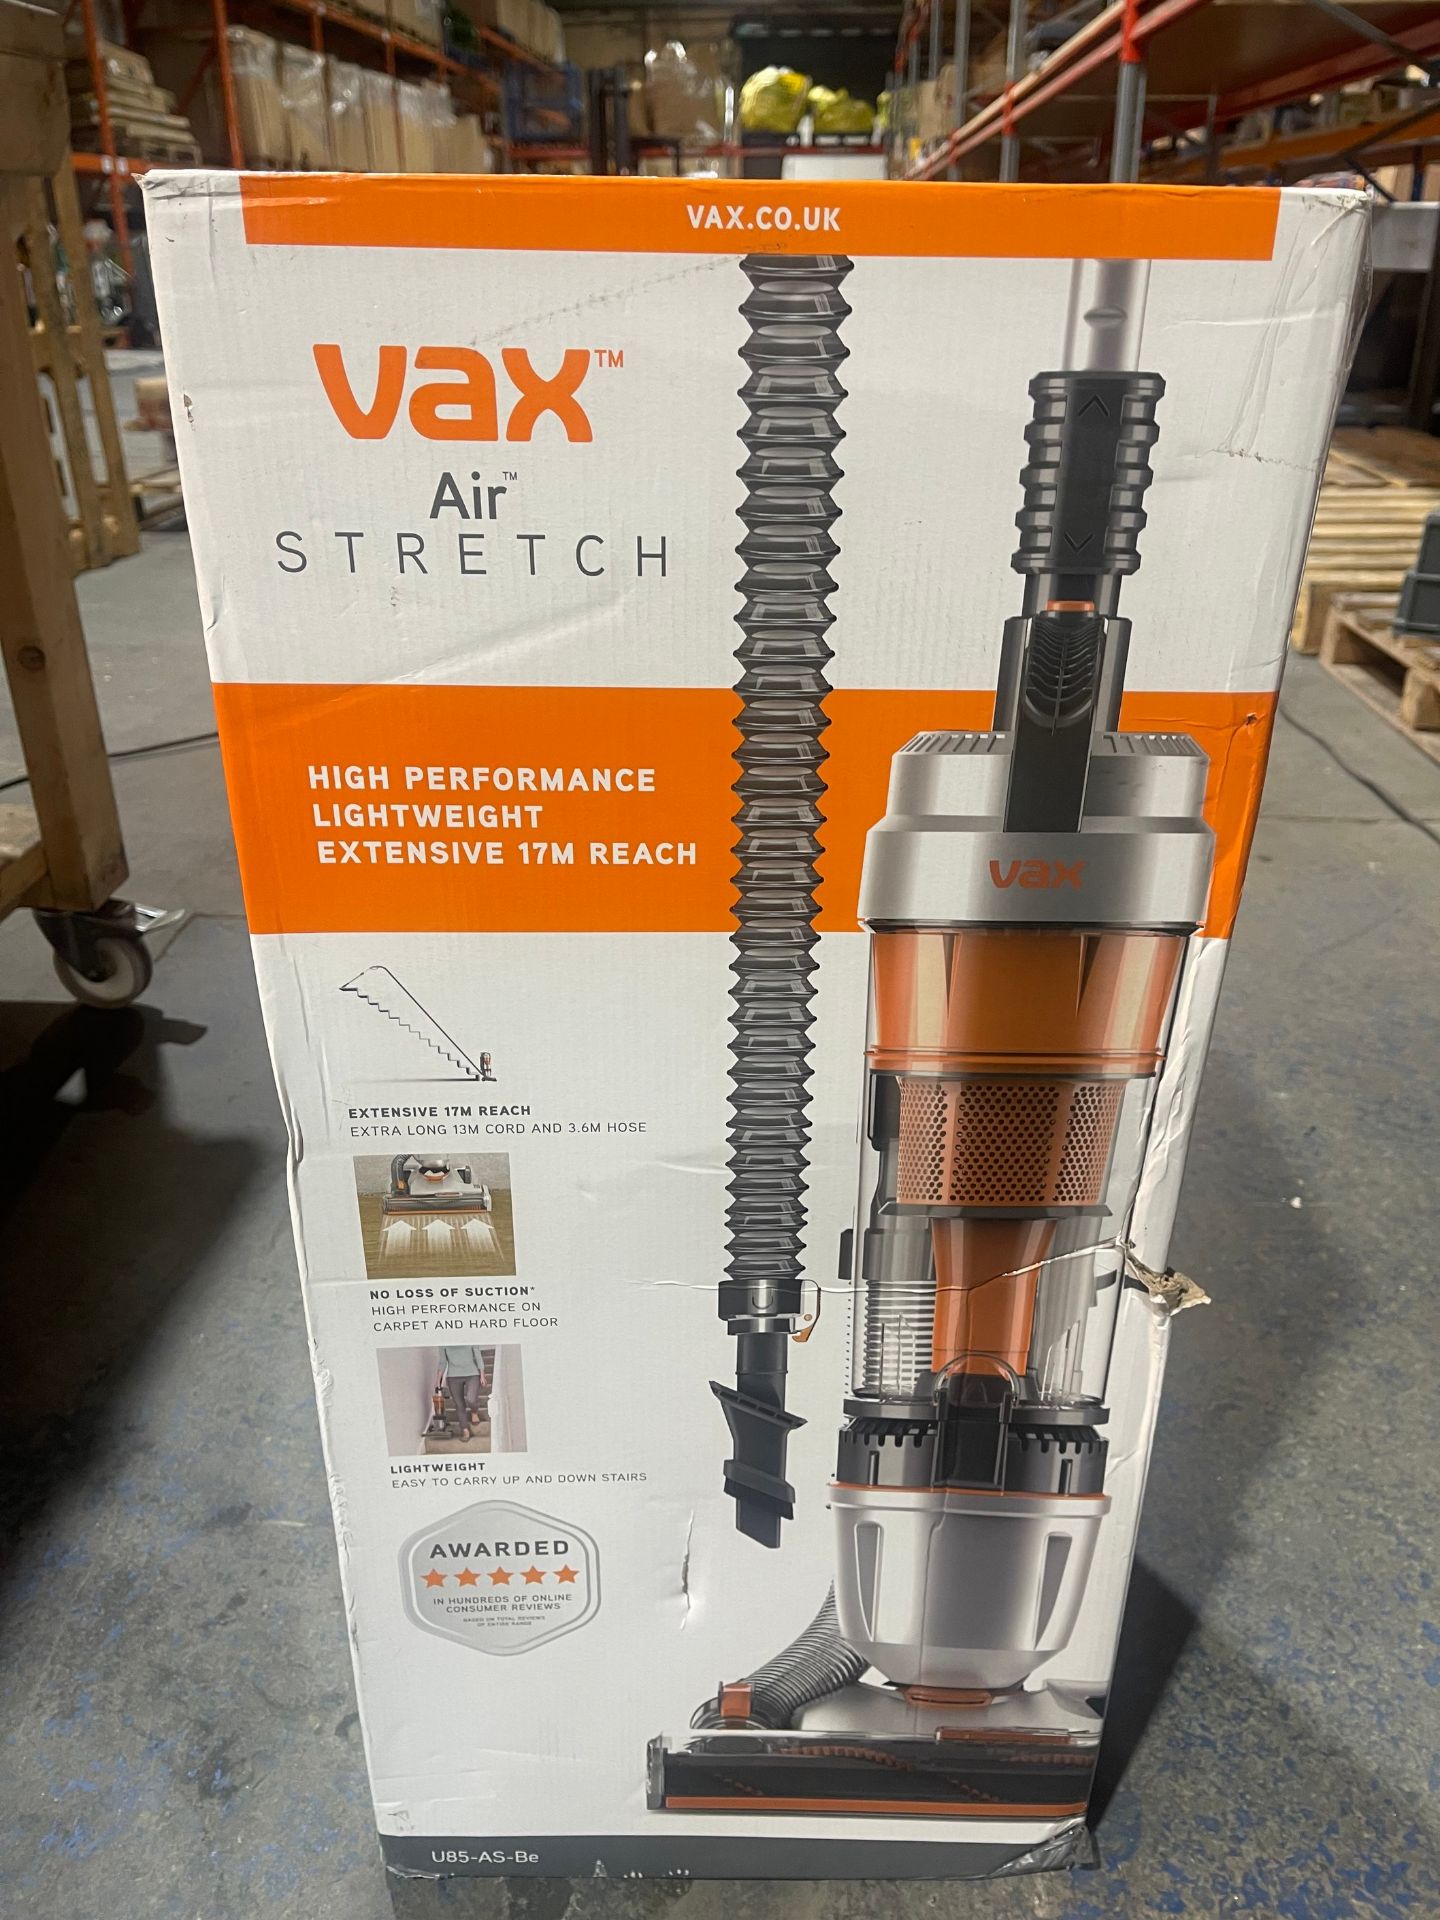 Vax U85-AS-Be Air Stretch Upright Vacuum, 1.5 Litre, 820 W - Silver/Orange[Energy Class A] £99.